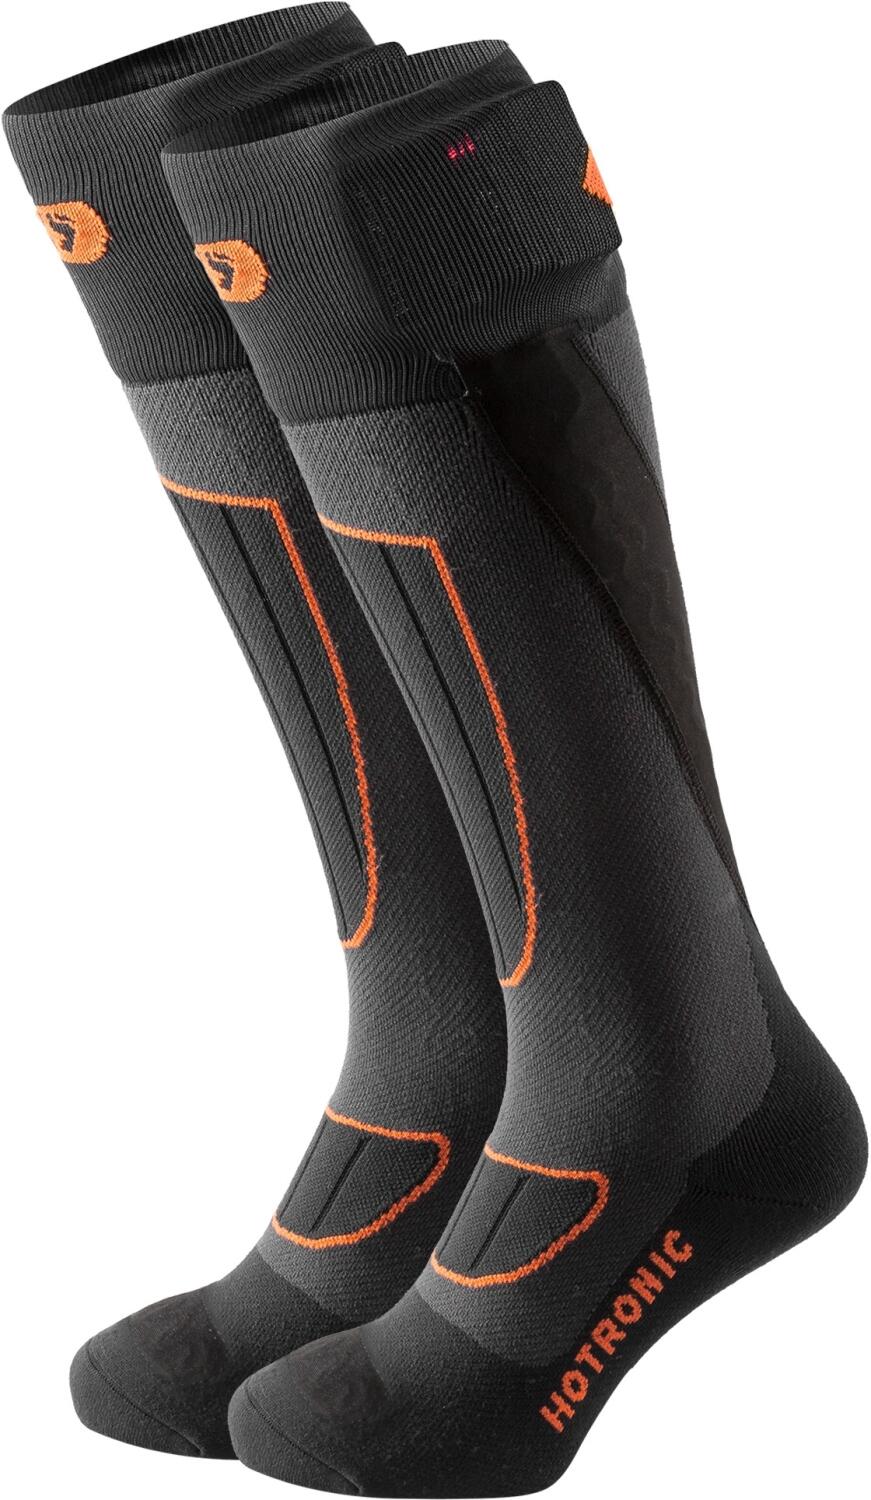 Hotronic Heat Socks Surround Comfort (45.0 - 48.0, anthrazit/orange, 1 Paar) von Hotronic